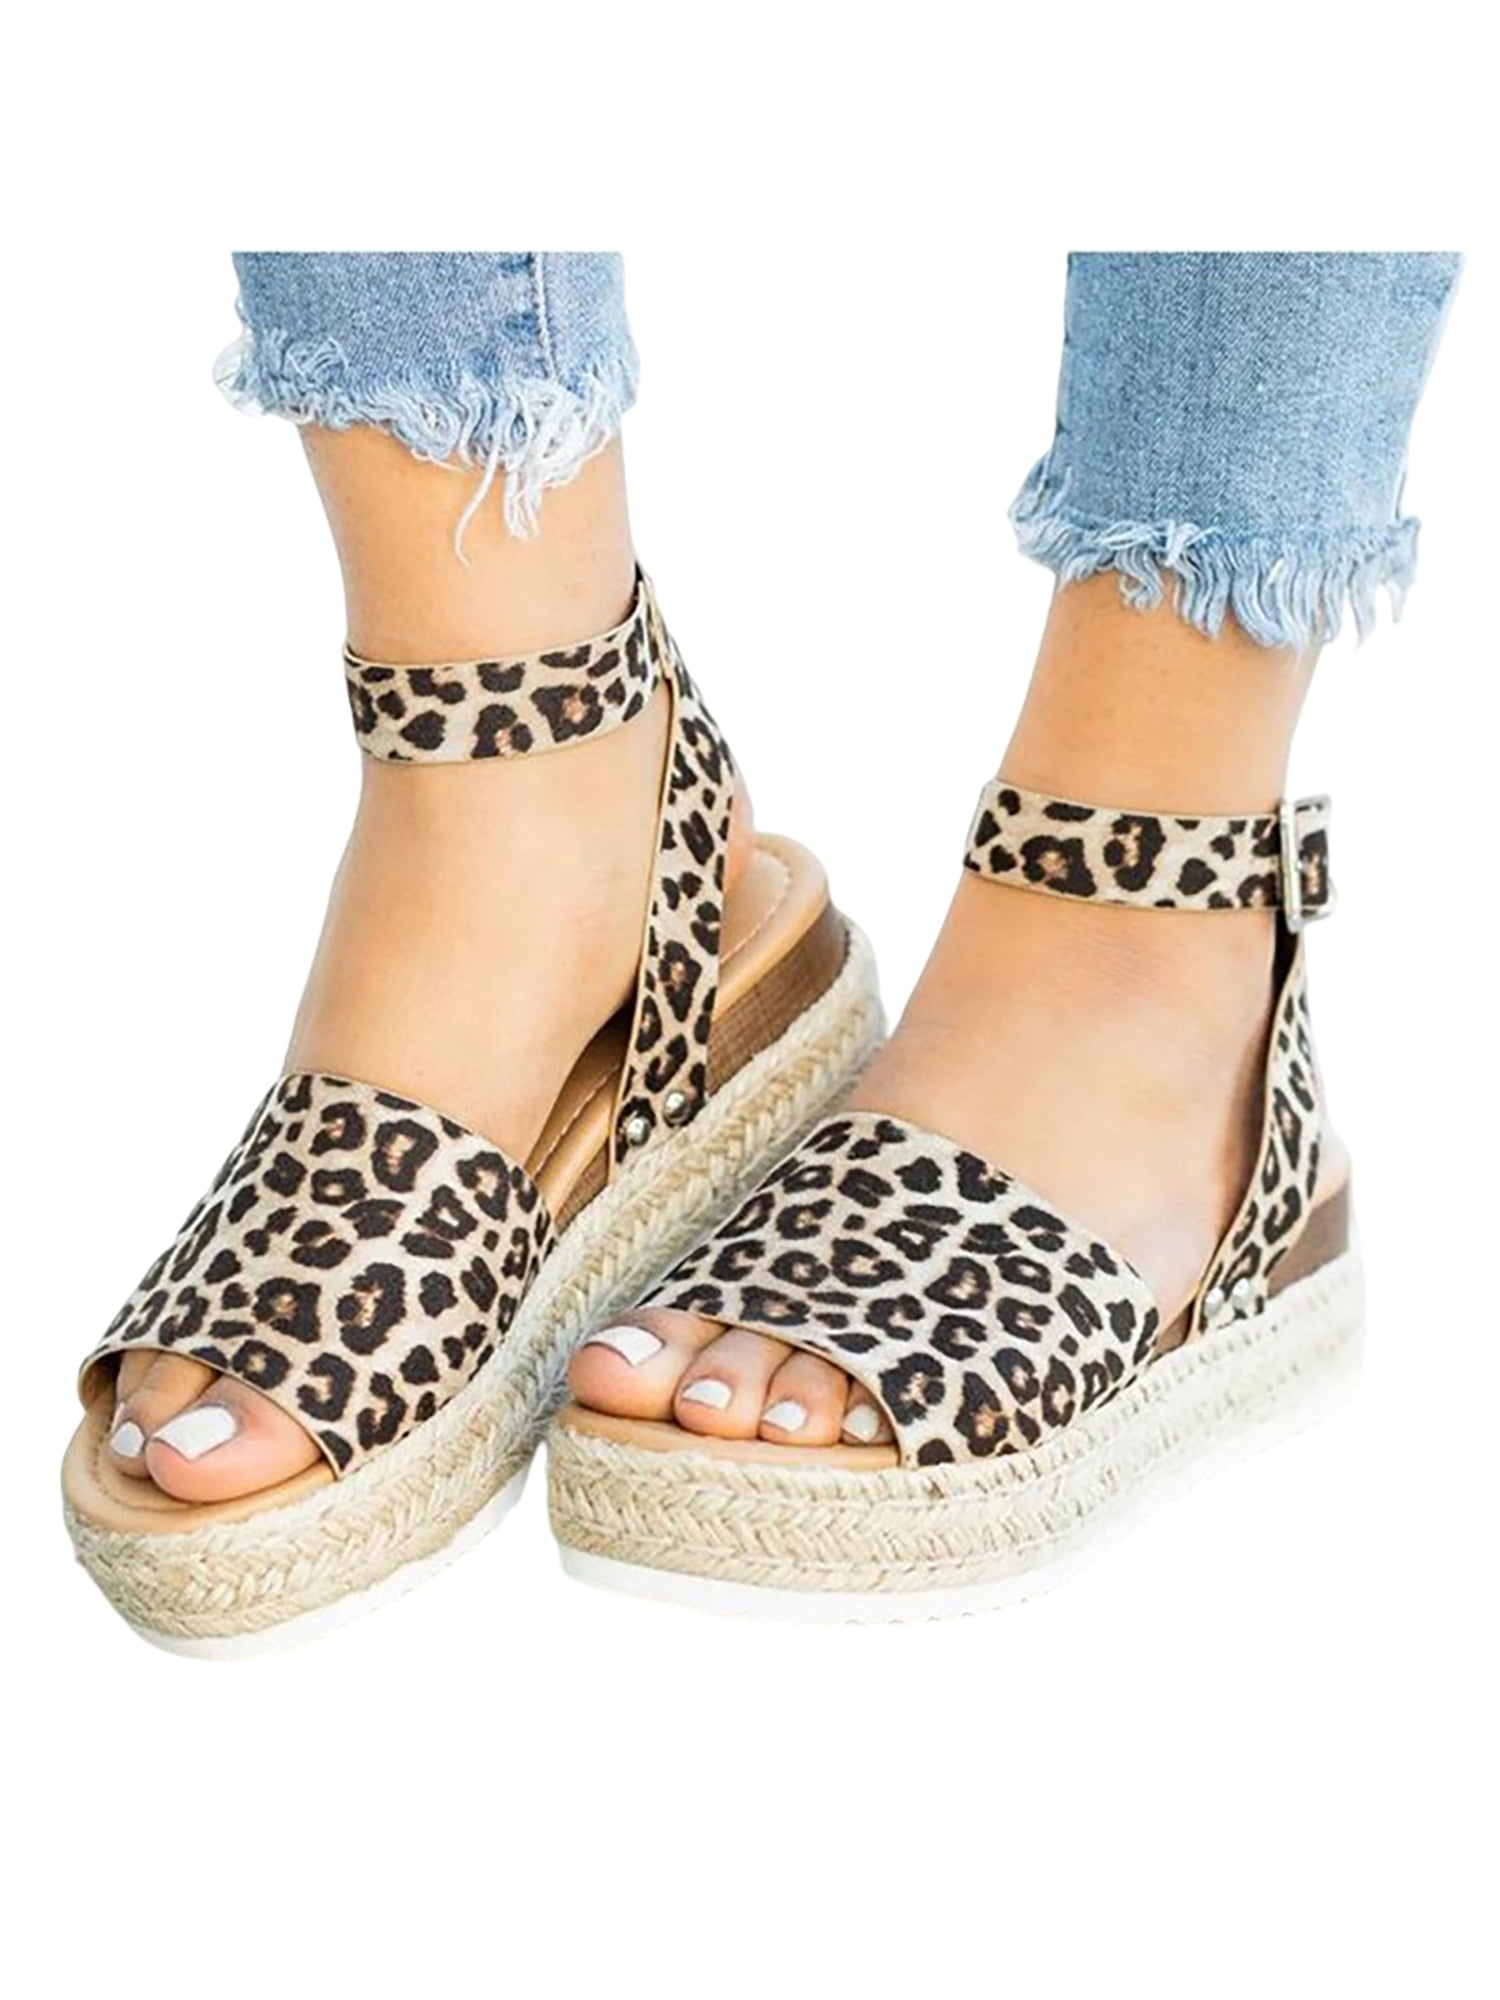 Woobling Women's Flatform Sandals Ankle Strap Open Toe Summer Shoes Leopard Size 11 - Walmart.com